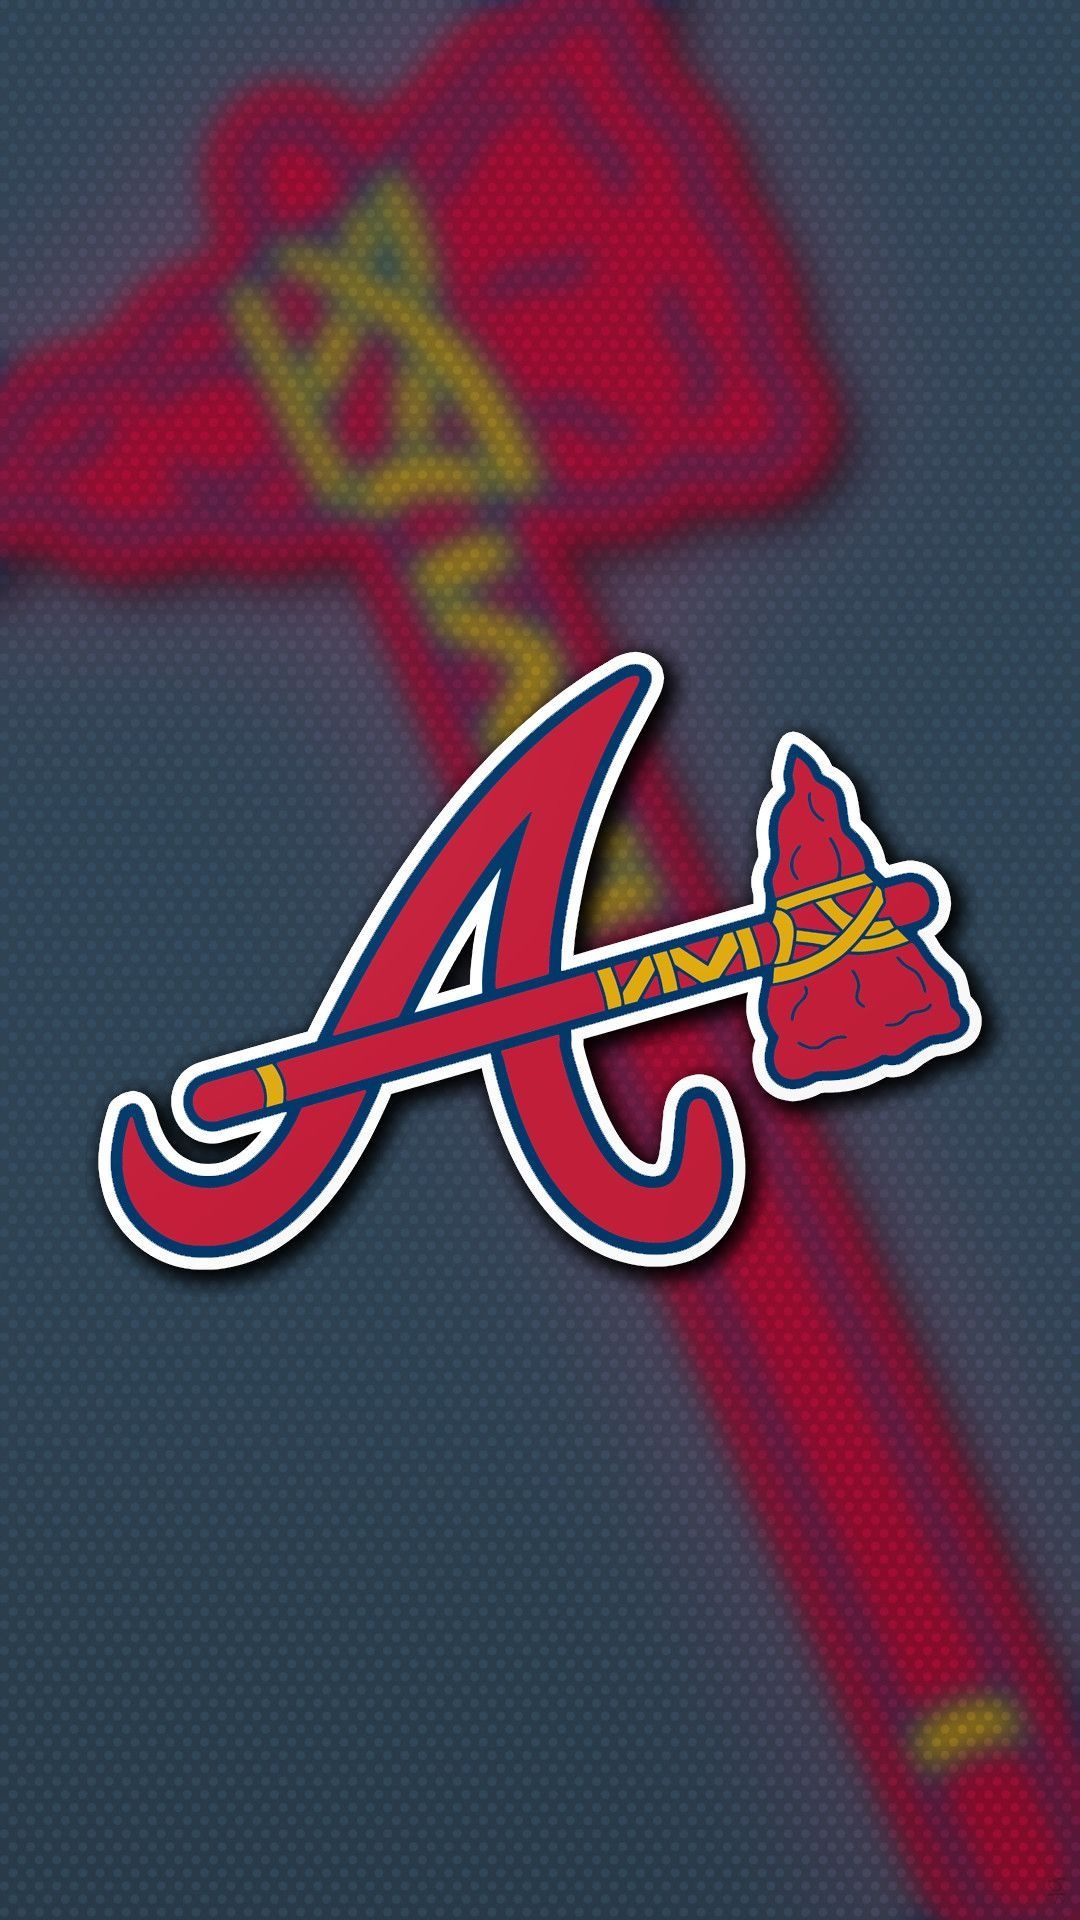 Atlanta Braves wallpaper, Baseball fandom, Team loyalty, Sports enthusiasm, 1080x1920 Full HD Phone